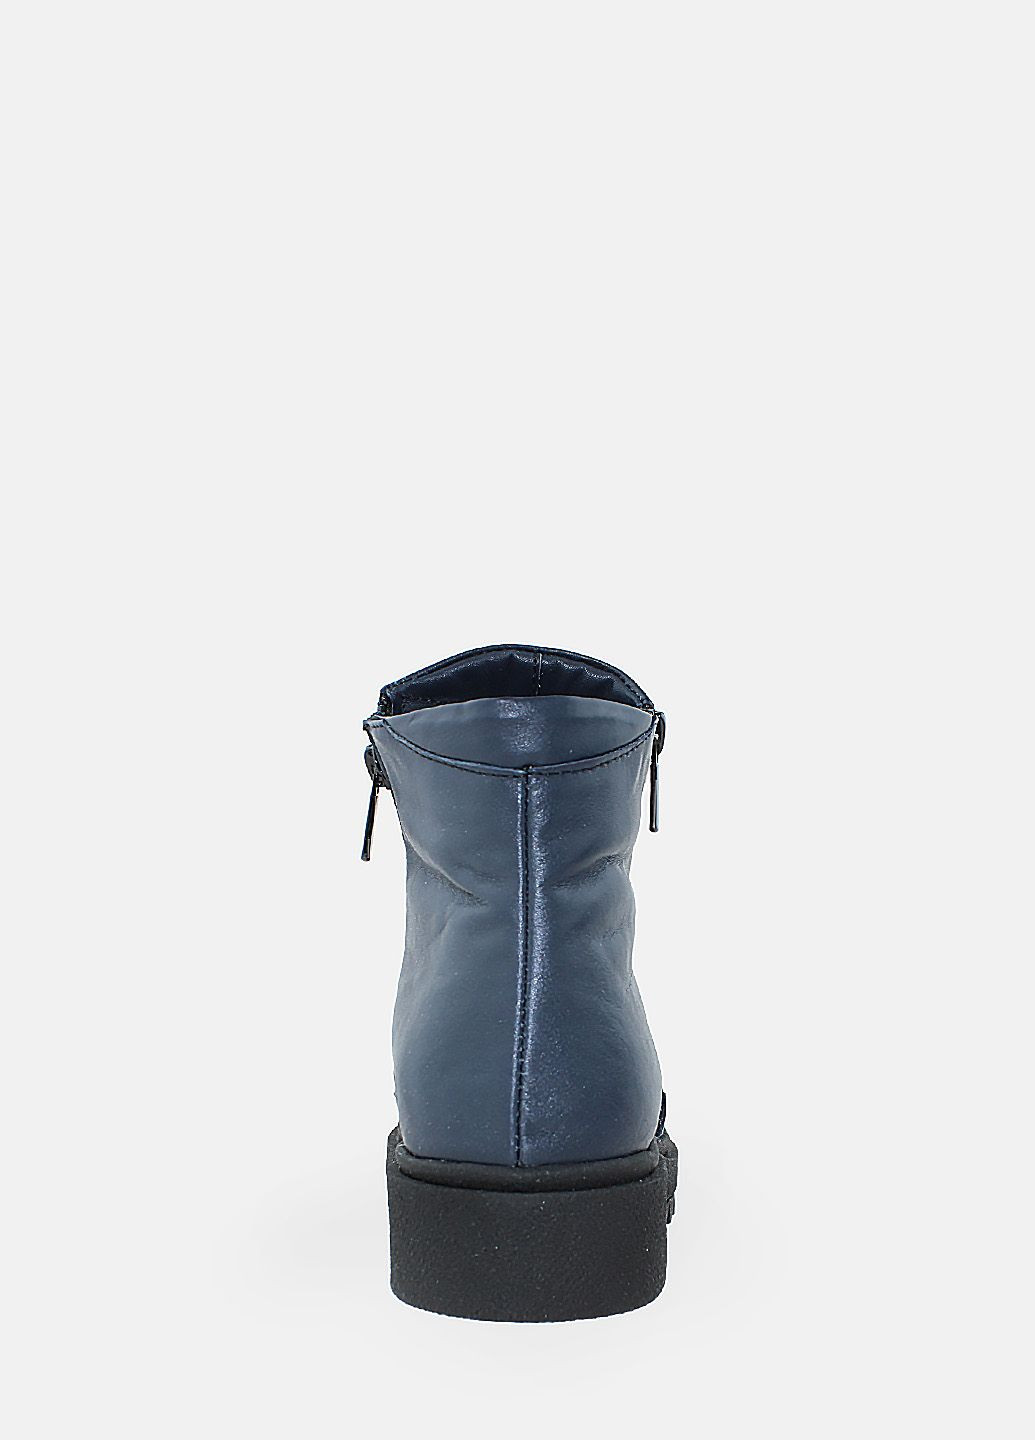 Зимние ботинки r932-1 синий Saurini